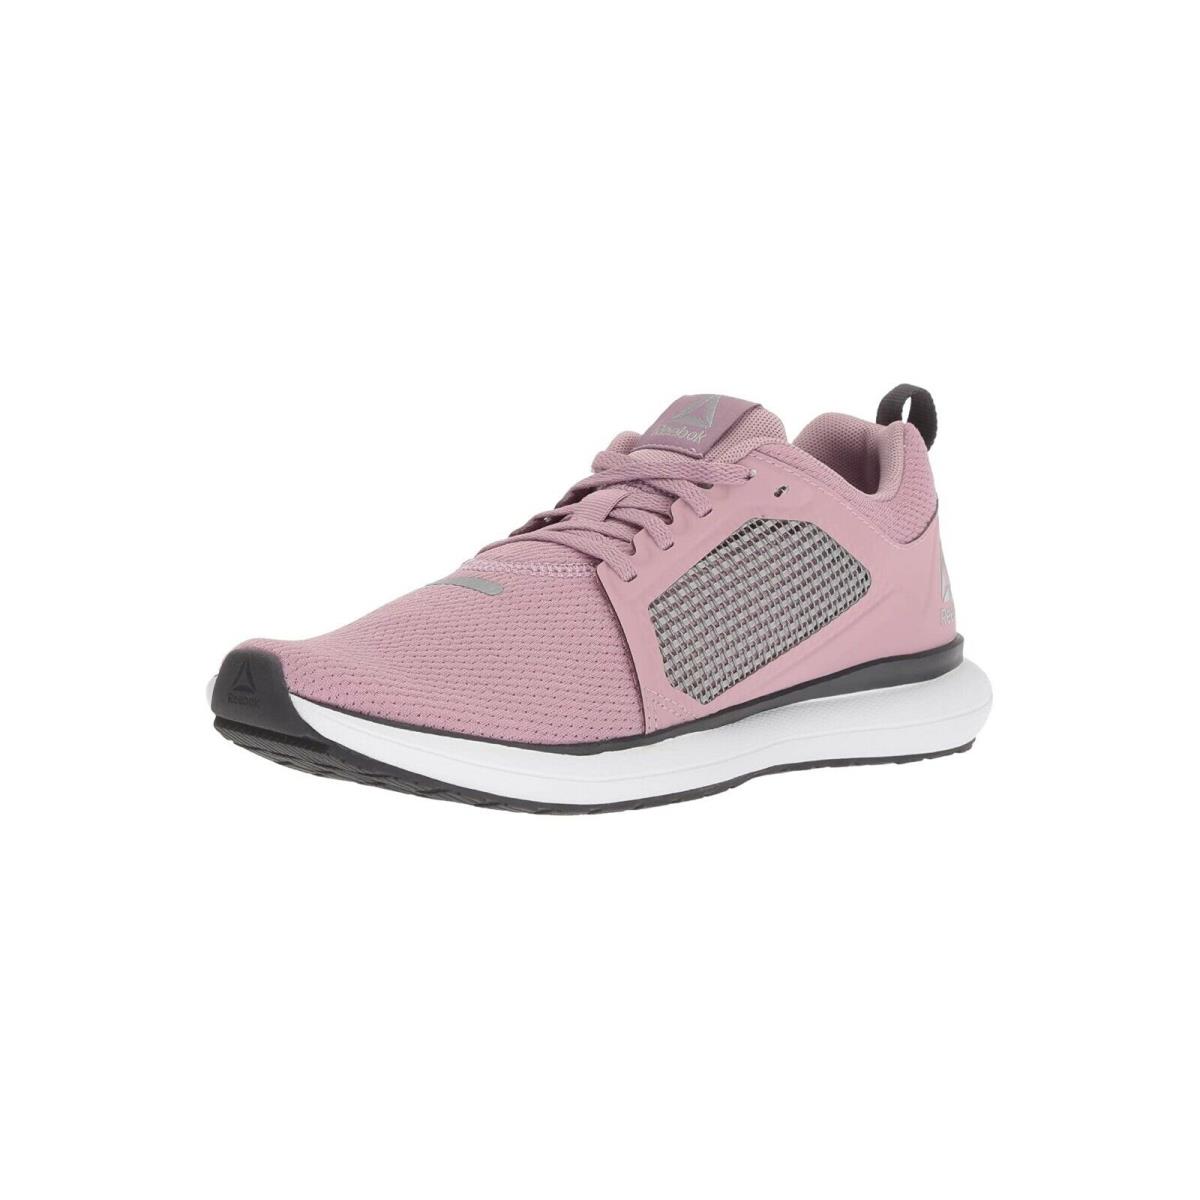 Reebok Driftium Ride Violet Lilac Pink Knit Running Shoes Women Sneakers - Pink